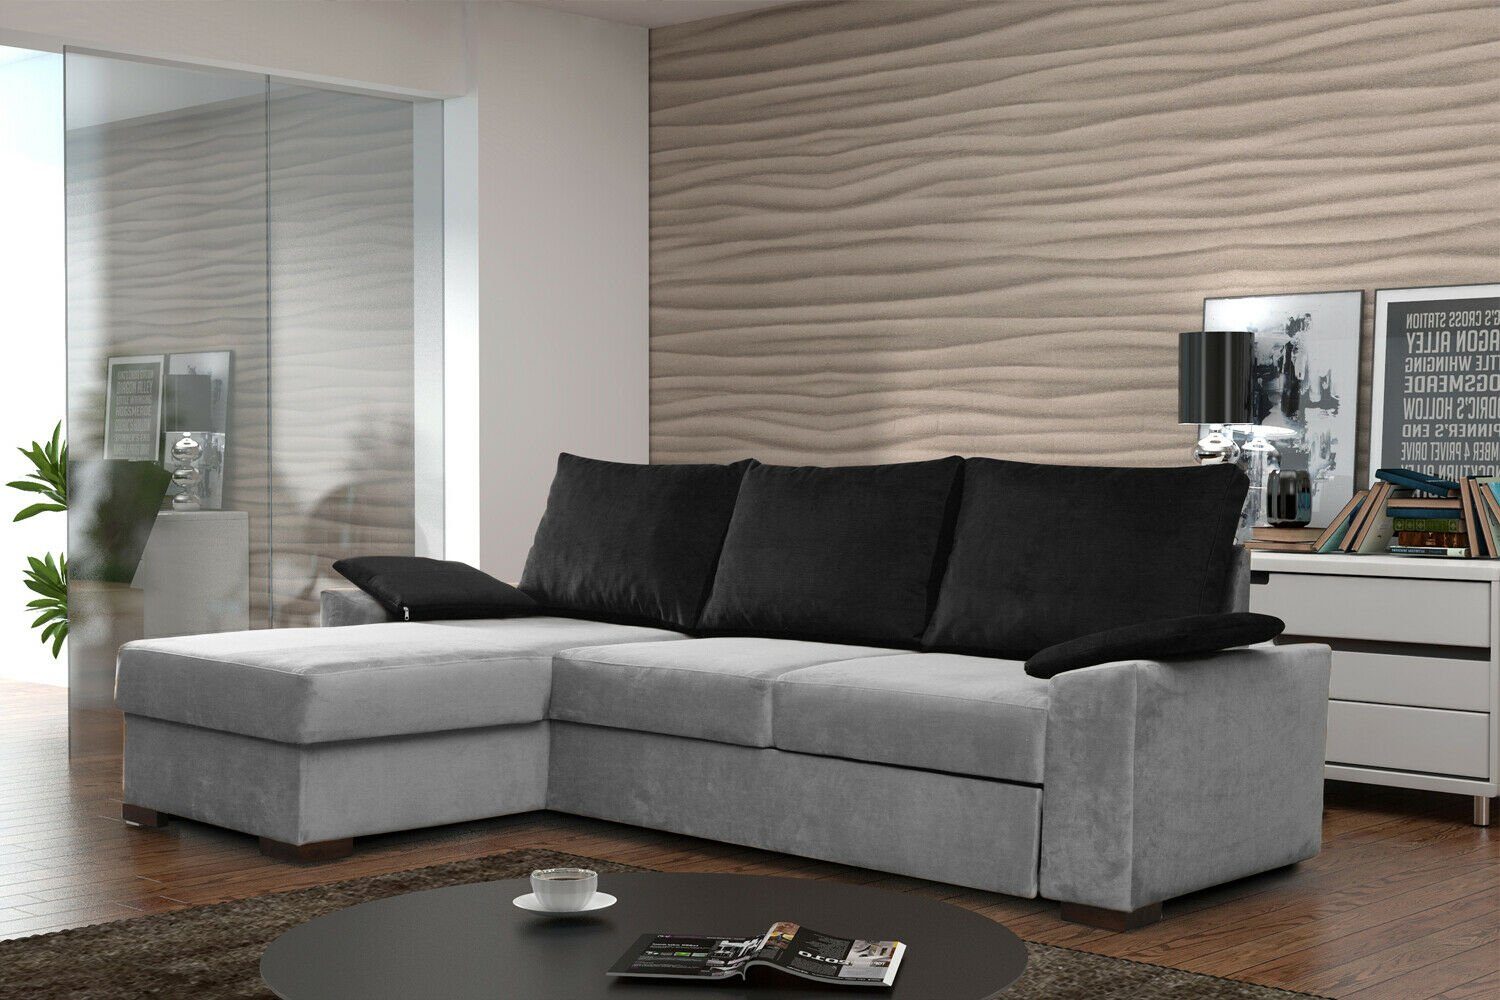 JVmoebel Ecksofa Design Ecksofa Schlafsofa Bettfunktion Couch Leder Polster Textil, Mit Bettfunktion Grau / Schwarz